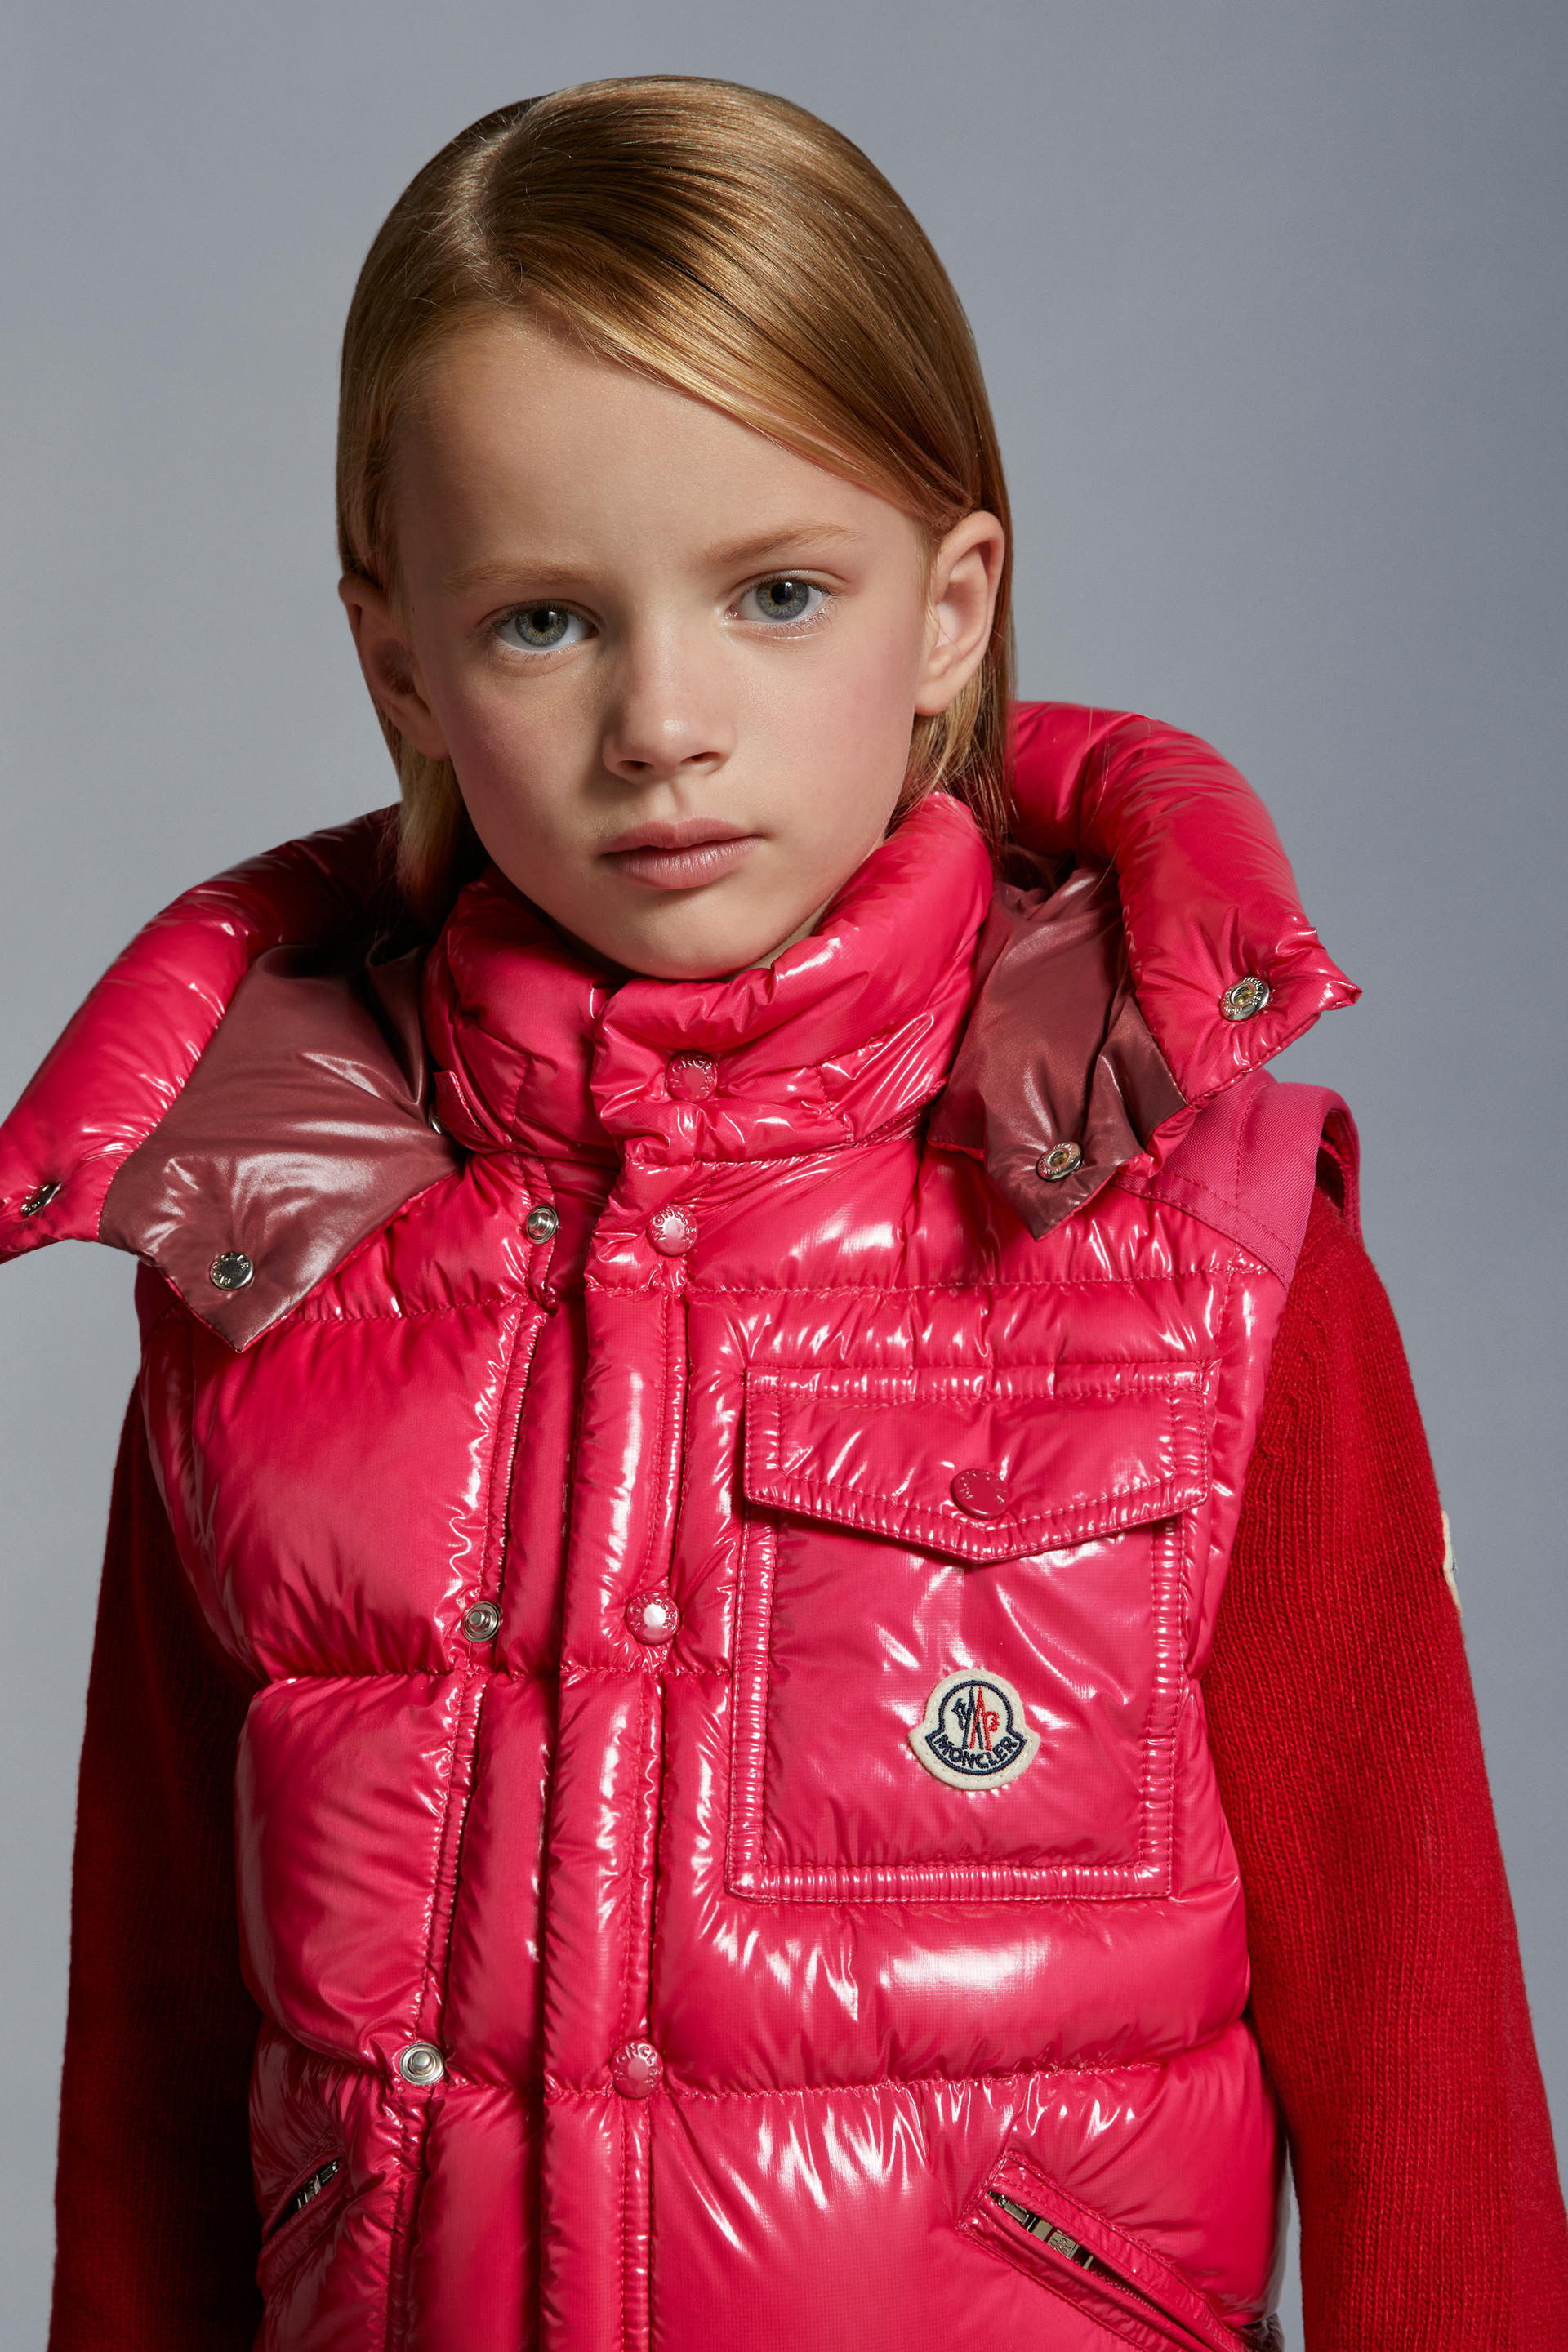 K-WAY: jacket for baby - Fuchsia  K-Way jacket K61157W online at